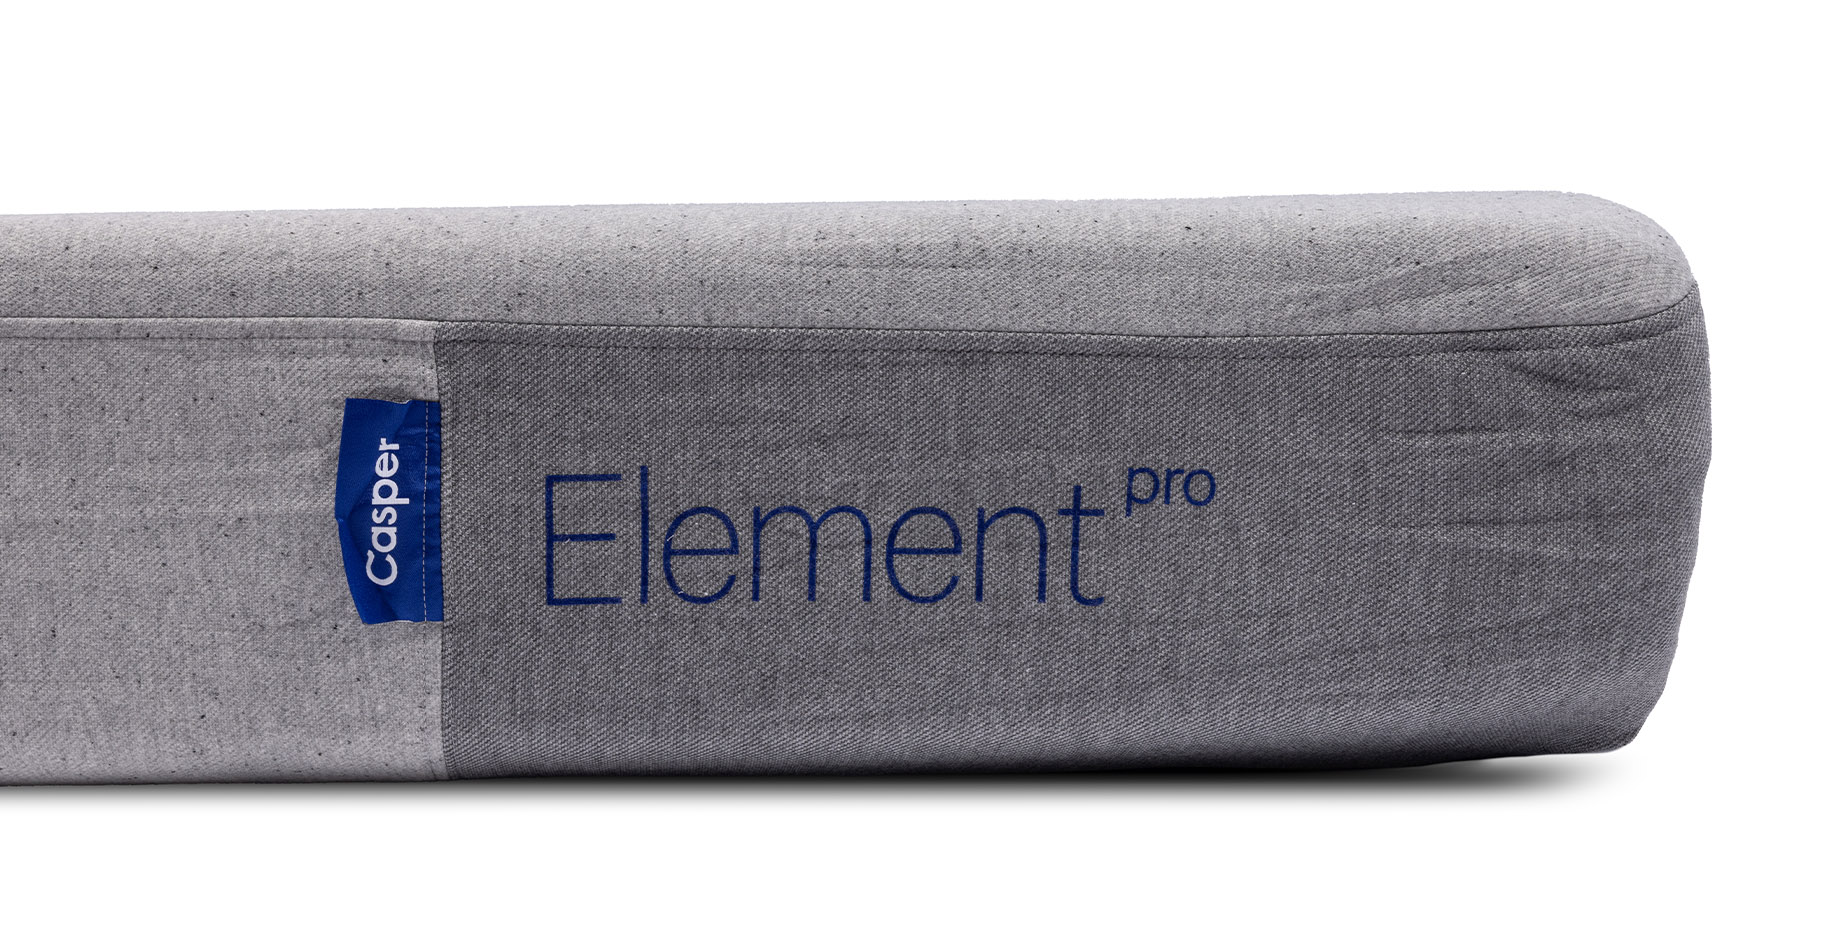 Casper Element Pro sideview of mattress corner